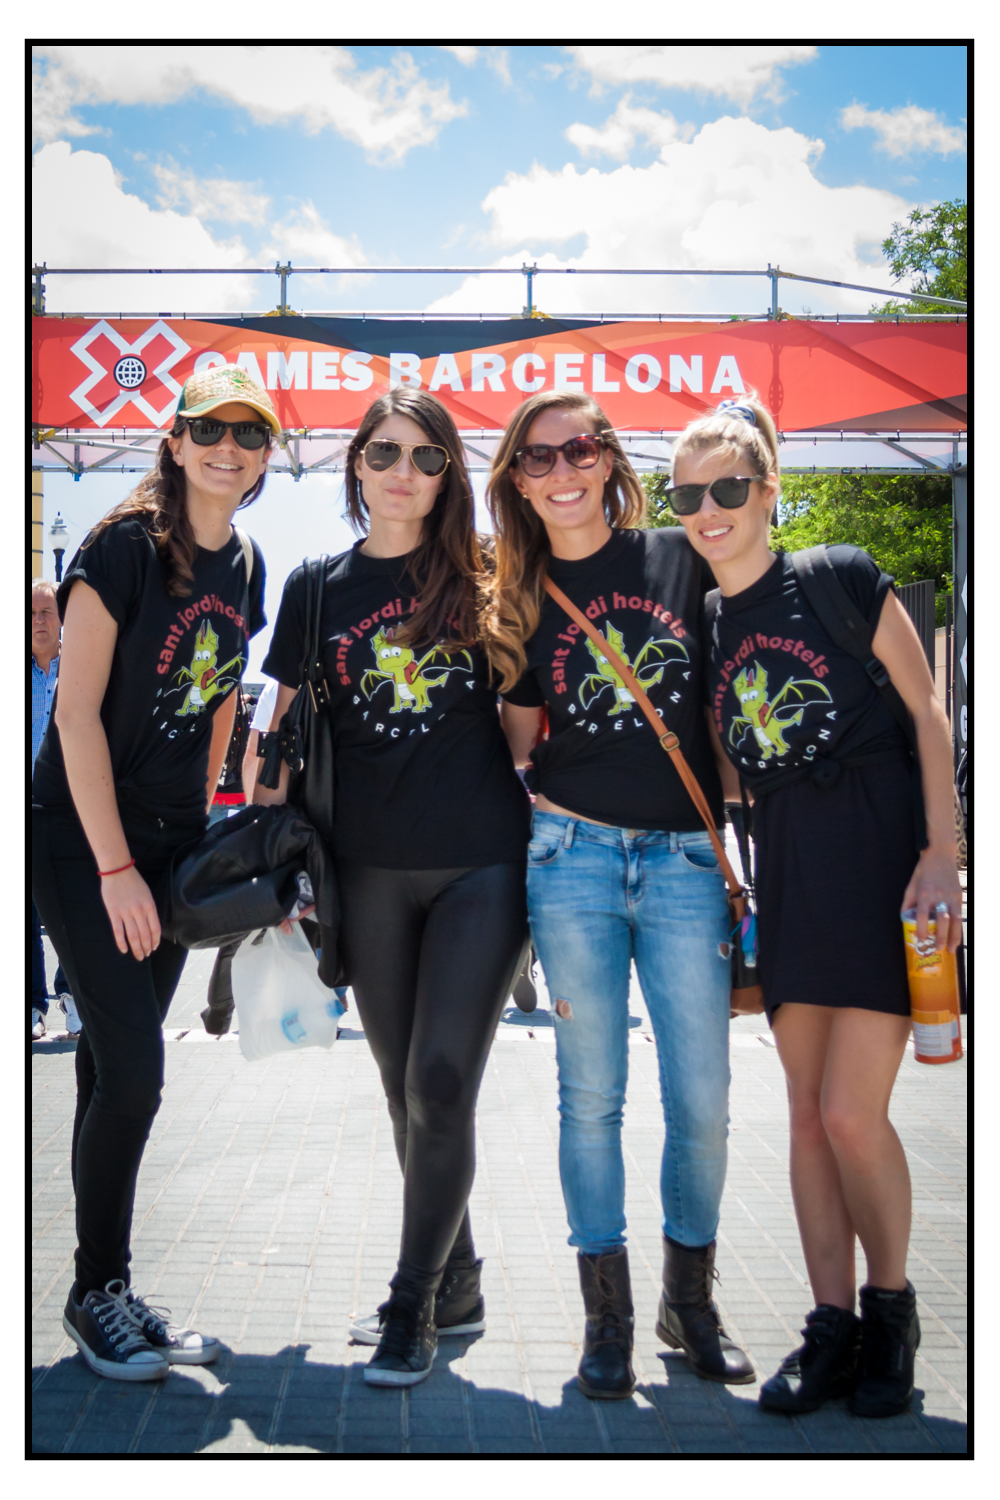 The Girls_X Games Barcelona 2013_0003